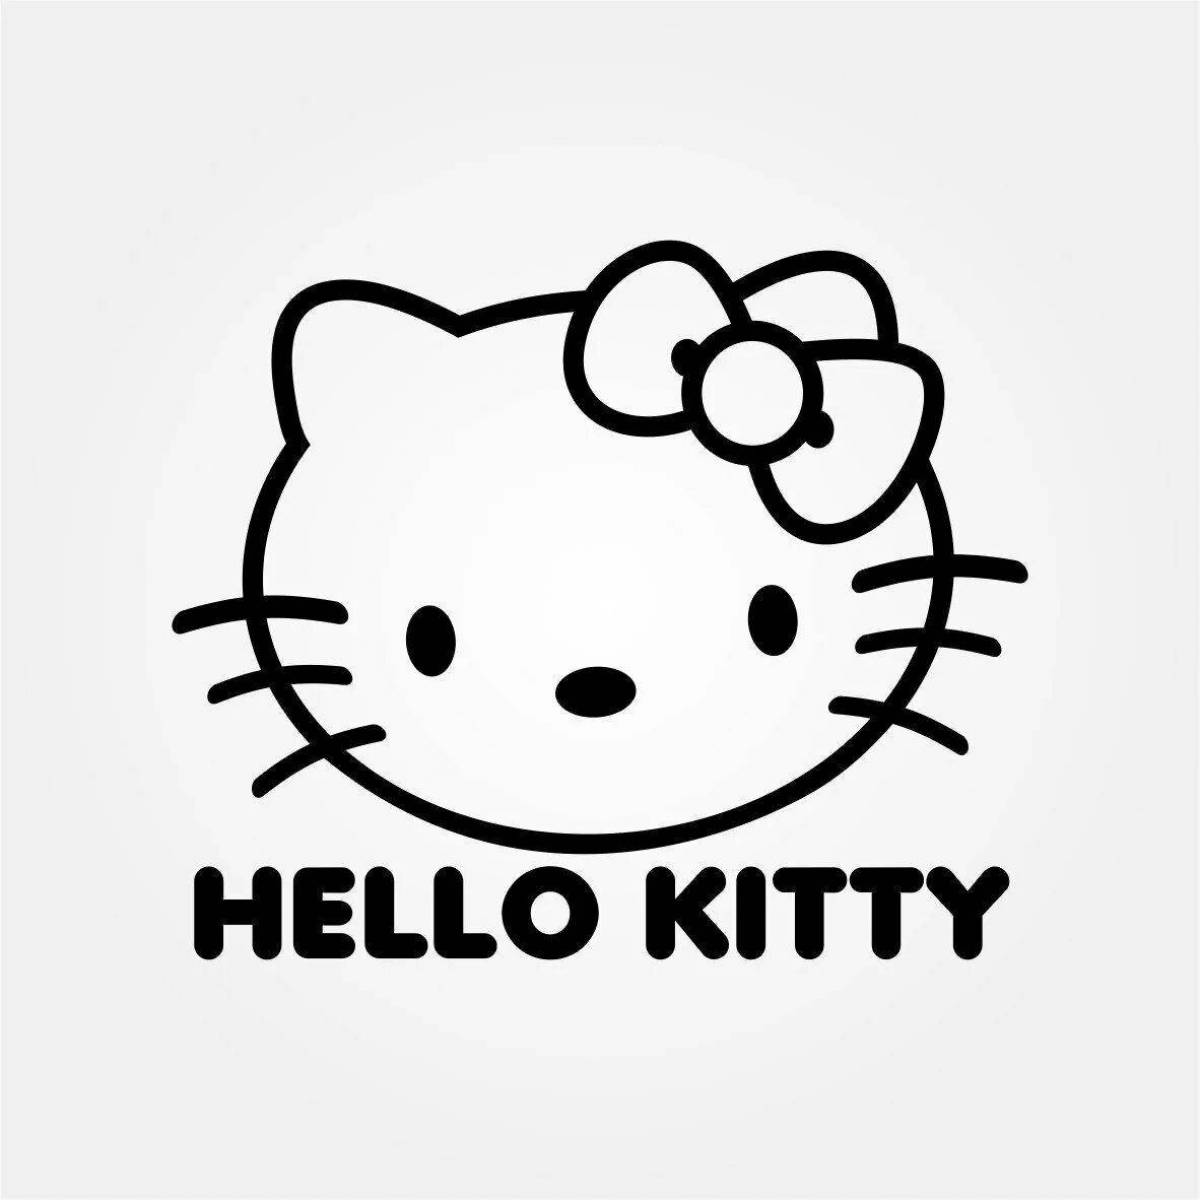 Joy stickers hello kitty coloring